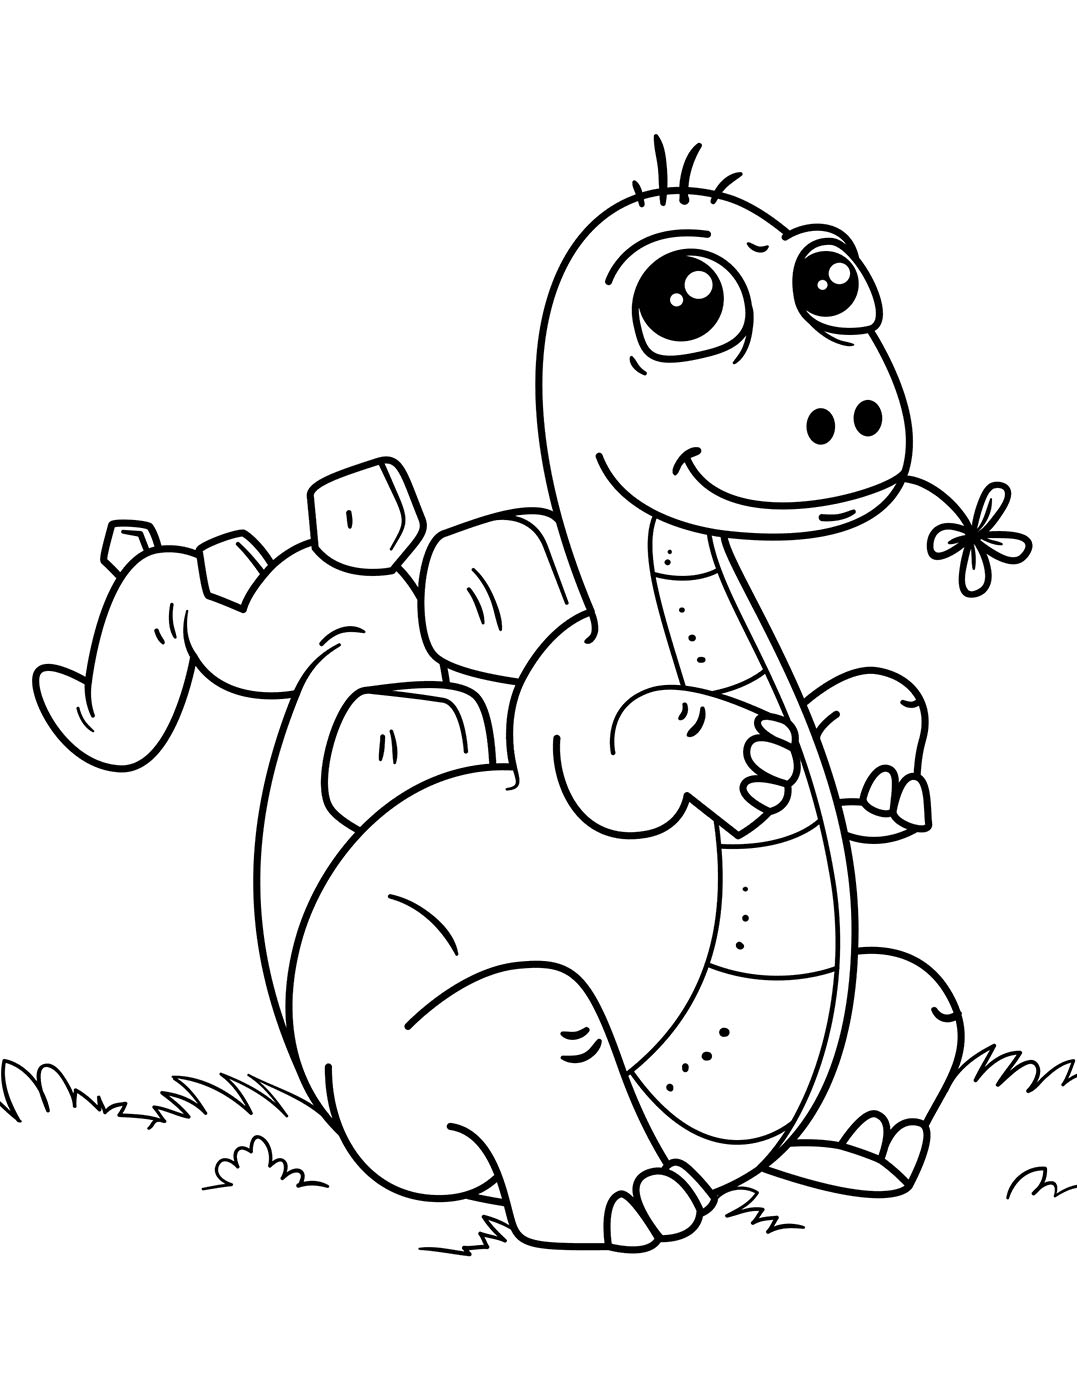 Preschool Easy Dinosaur Coloring Pages   pic public